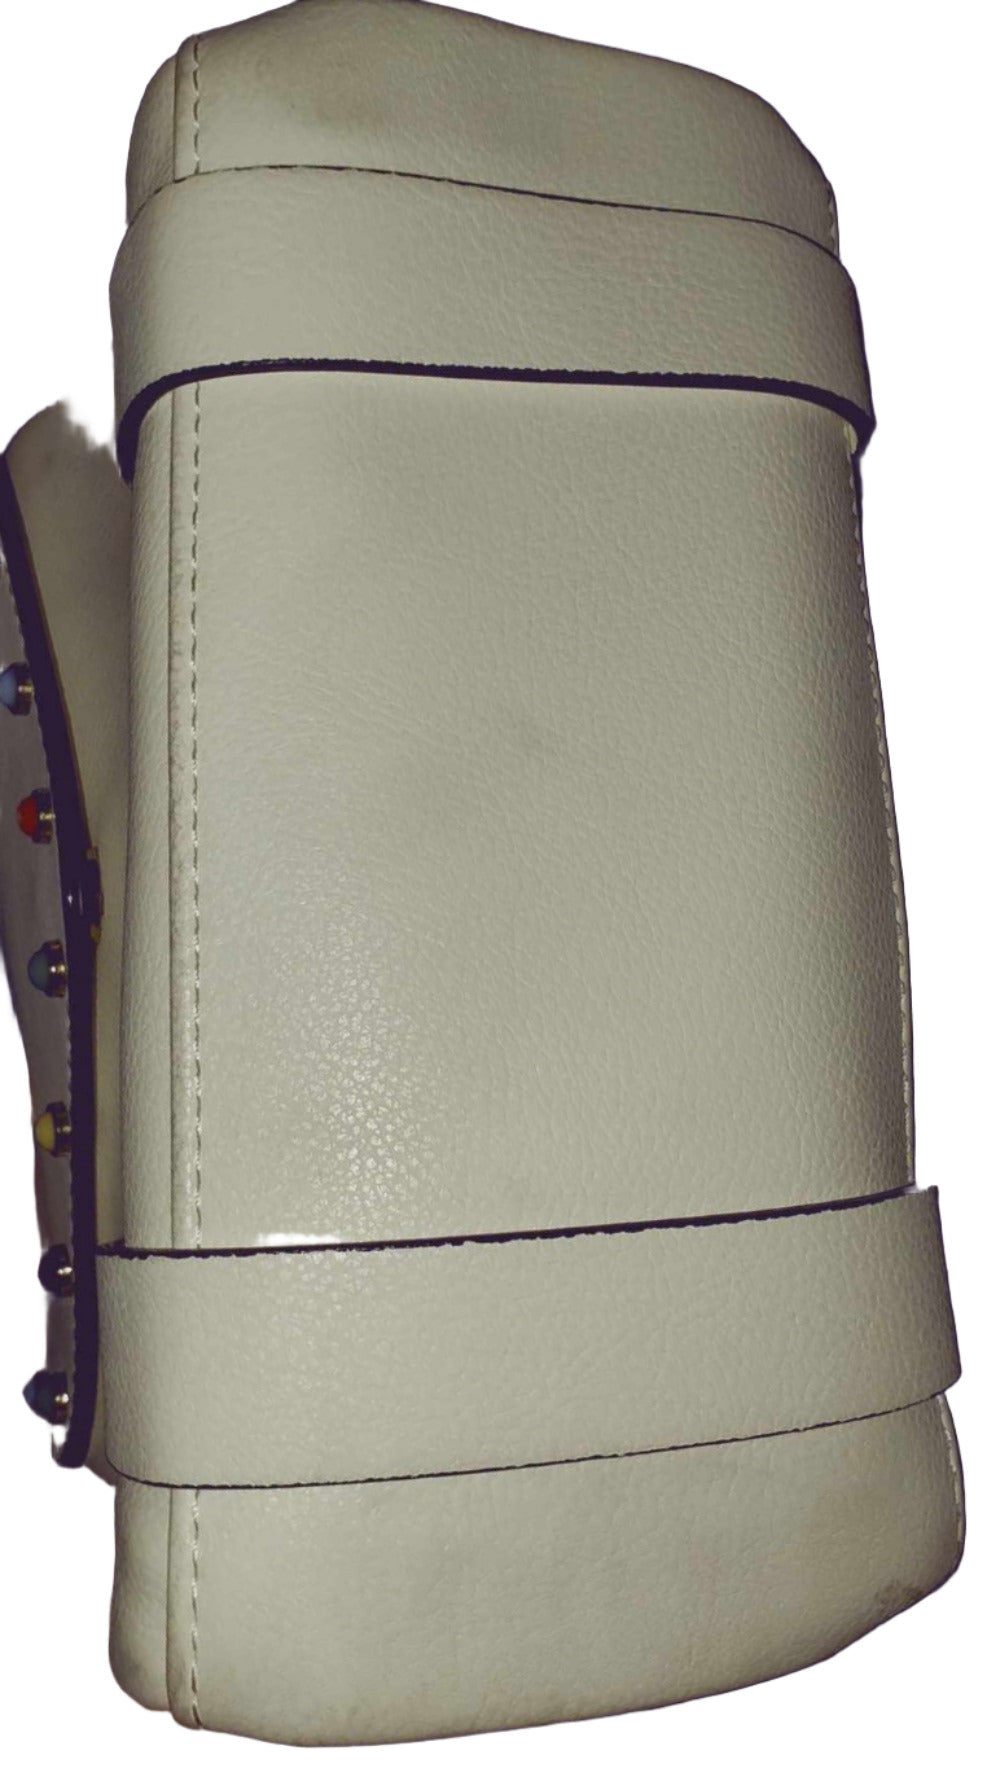 Gianni Bini White Handbag with Clear Acrylic Handle - preowned